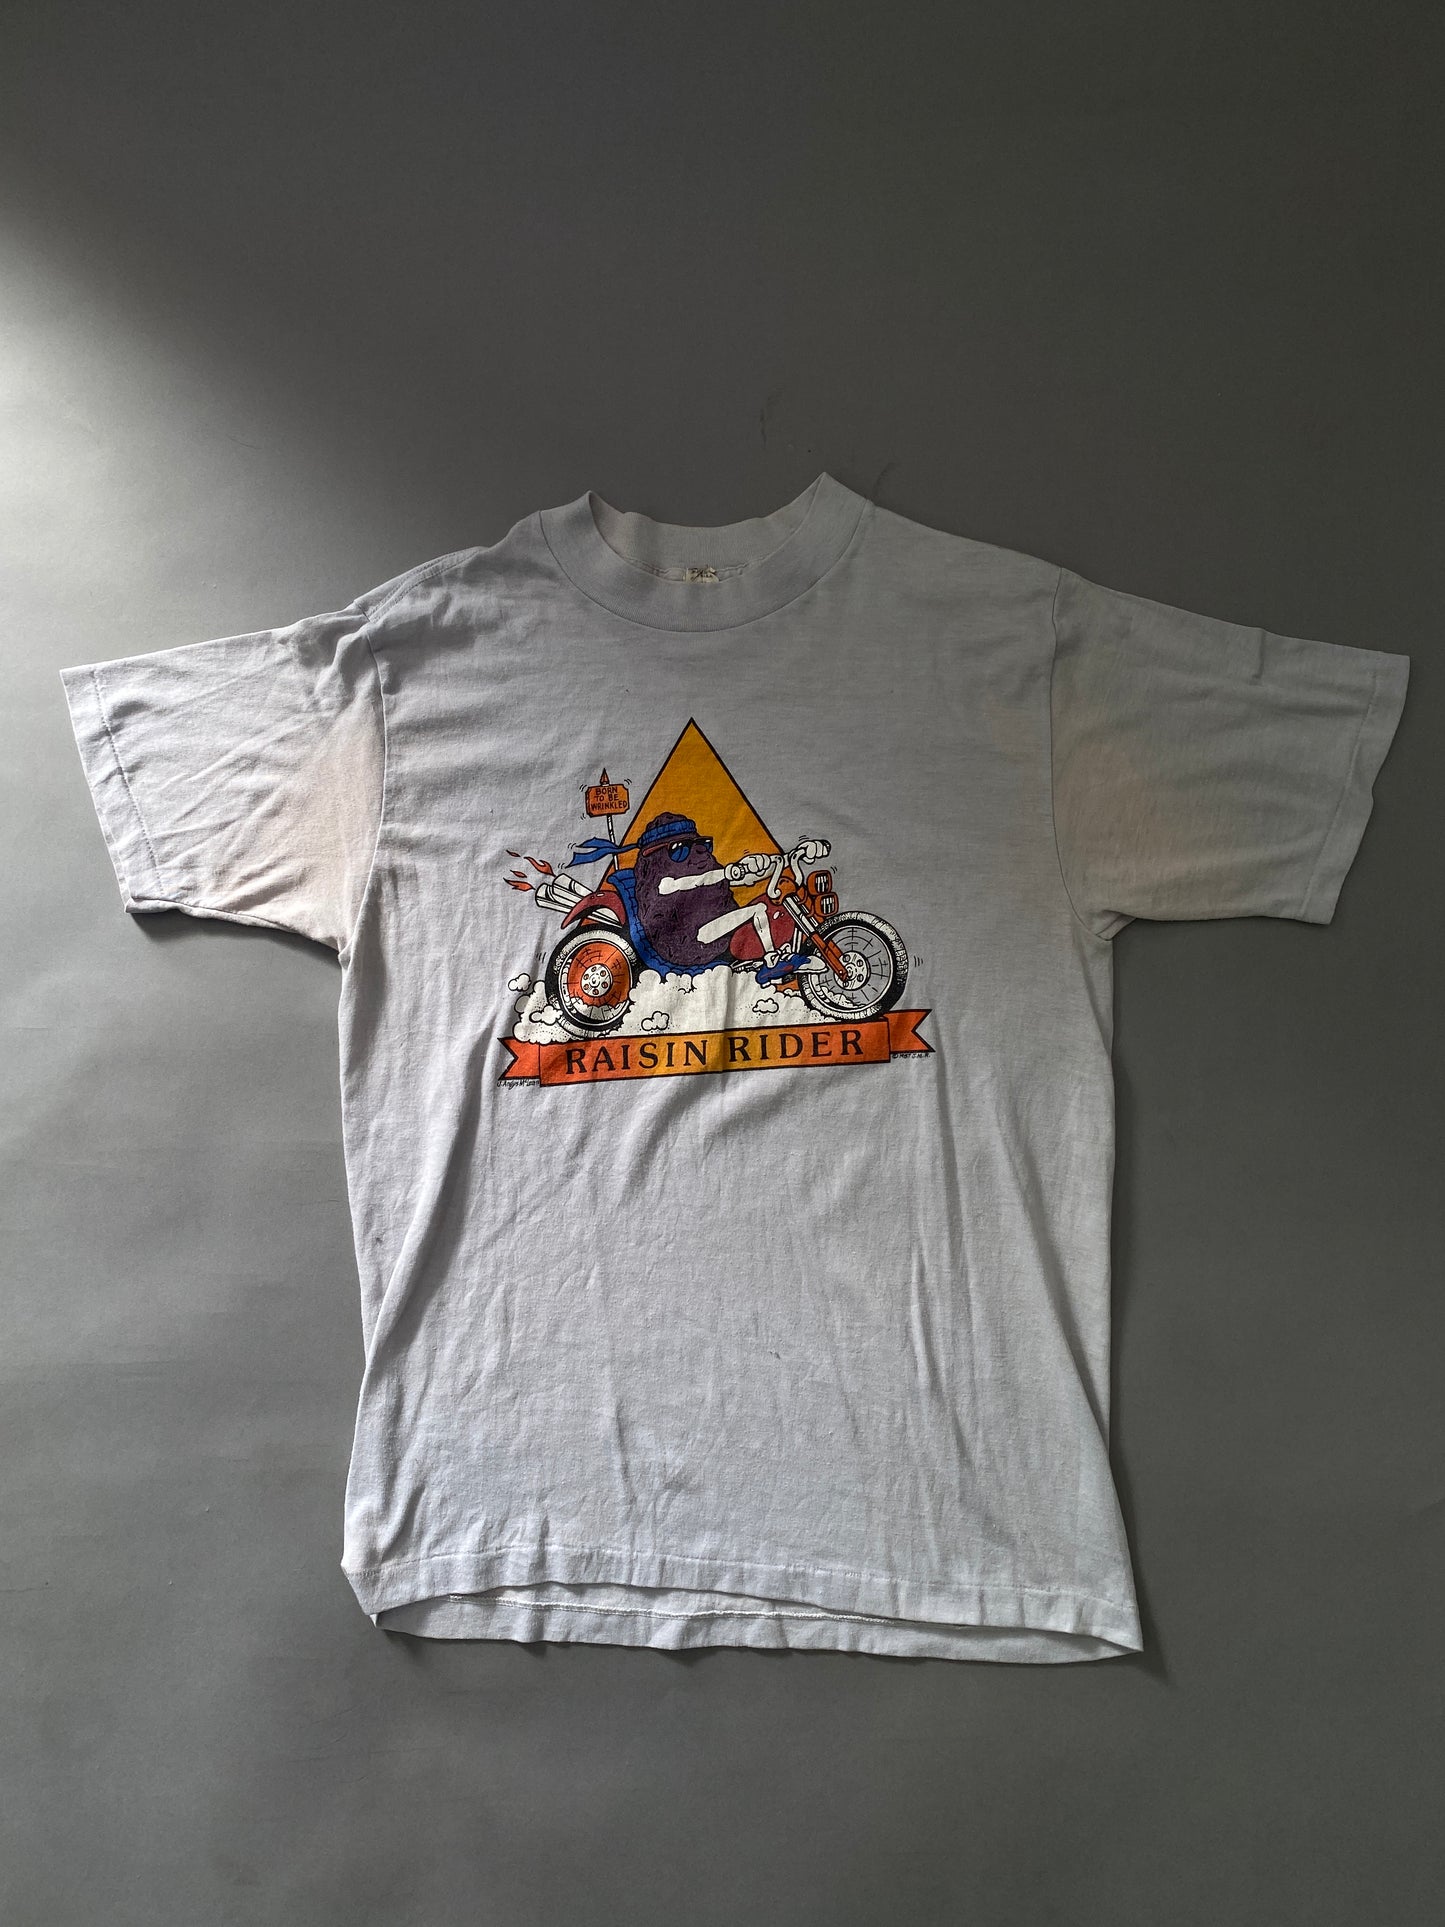 Racing Rider 80's T-shirt